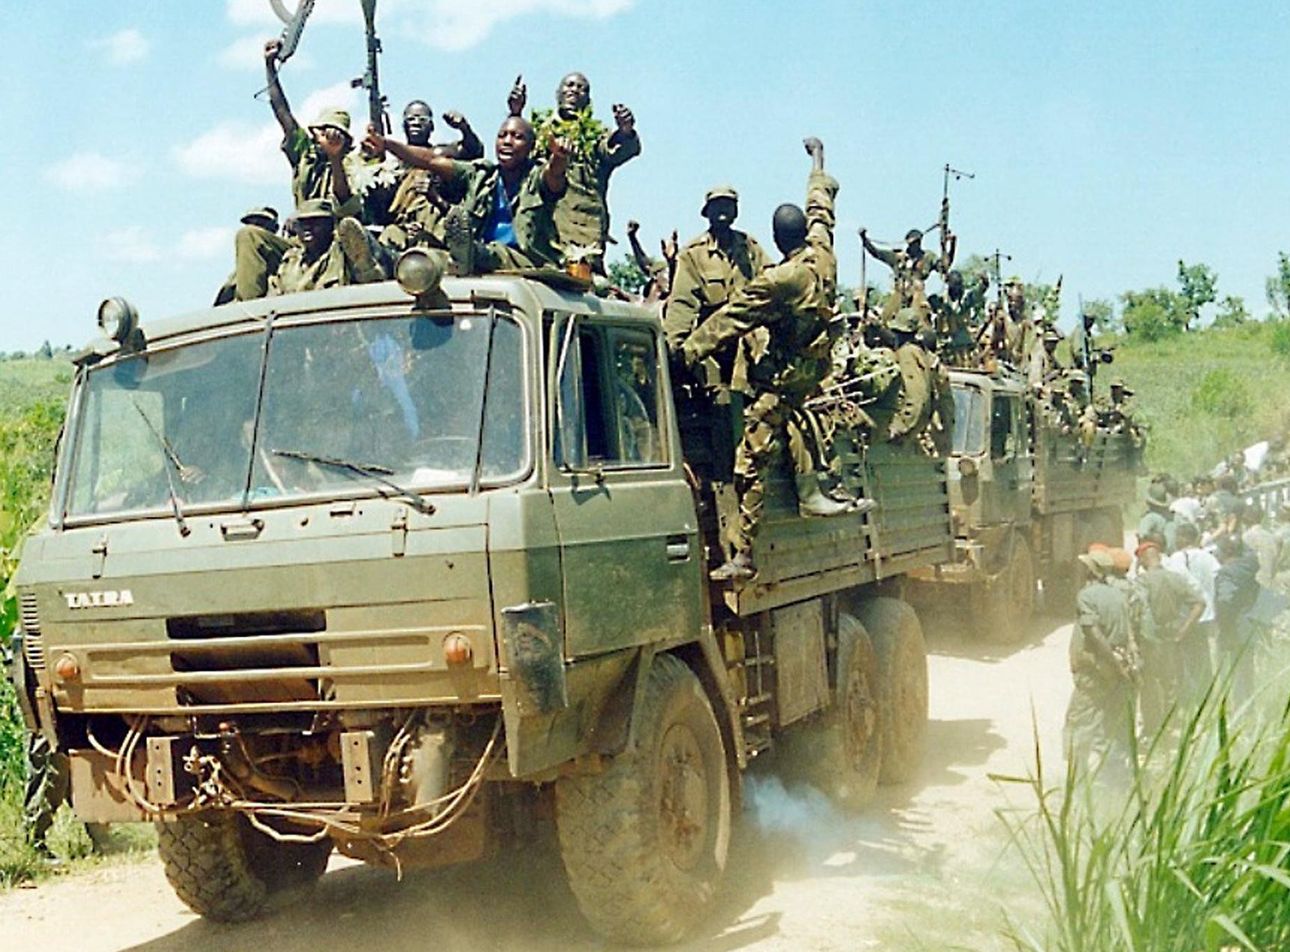 DRC uganda troops feb 22